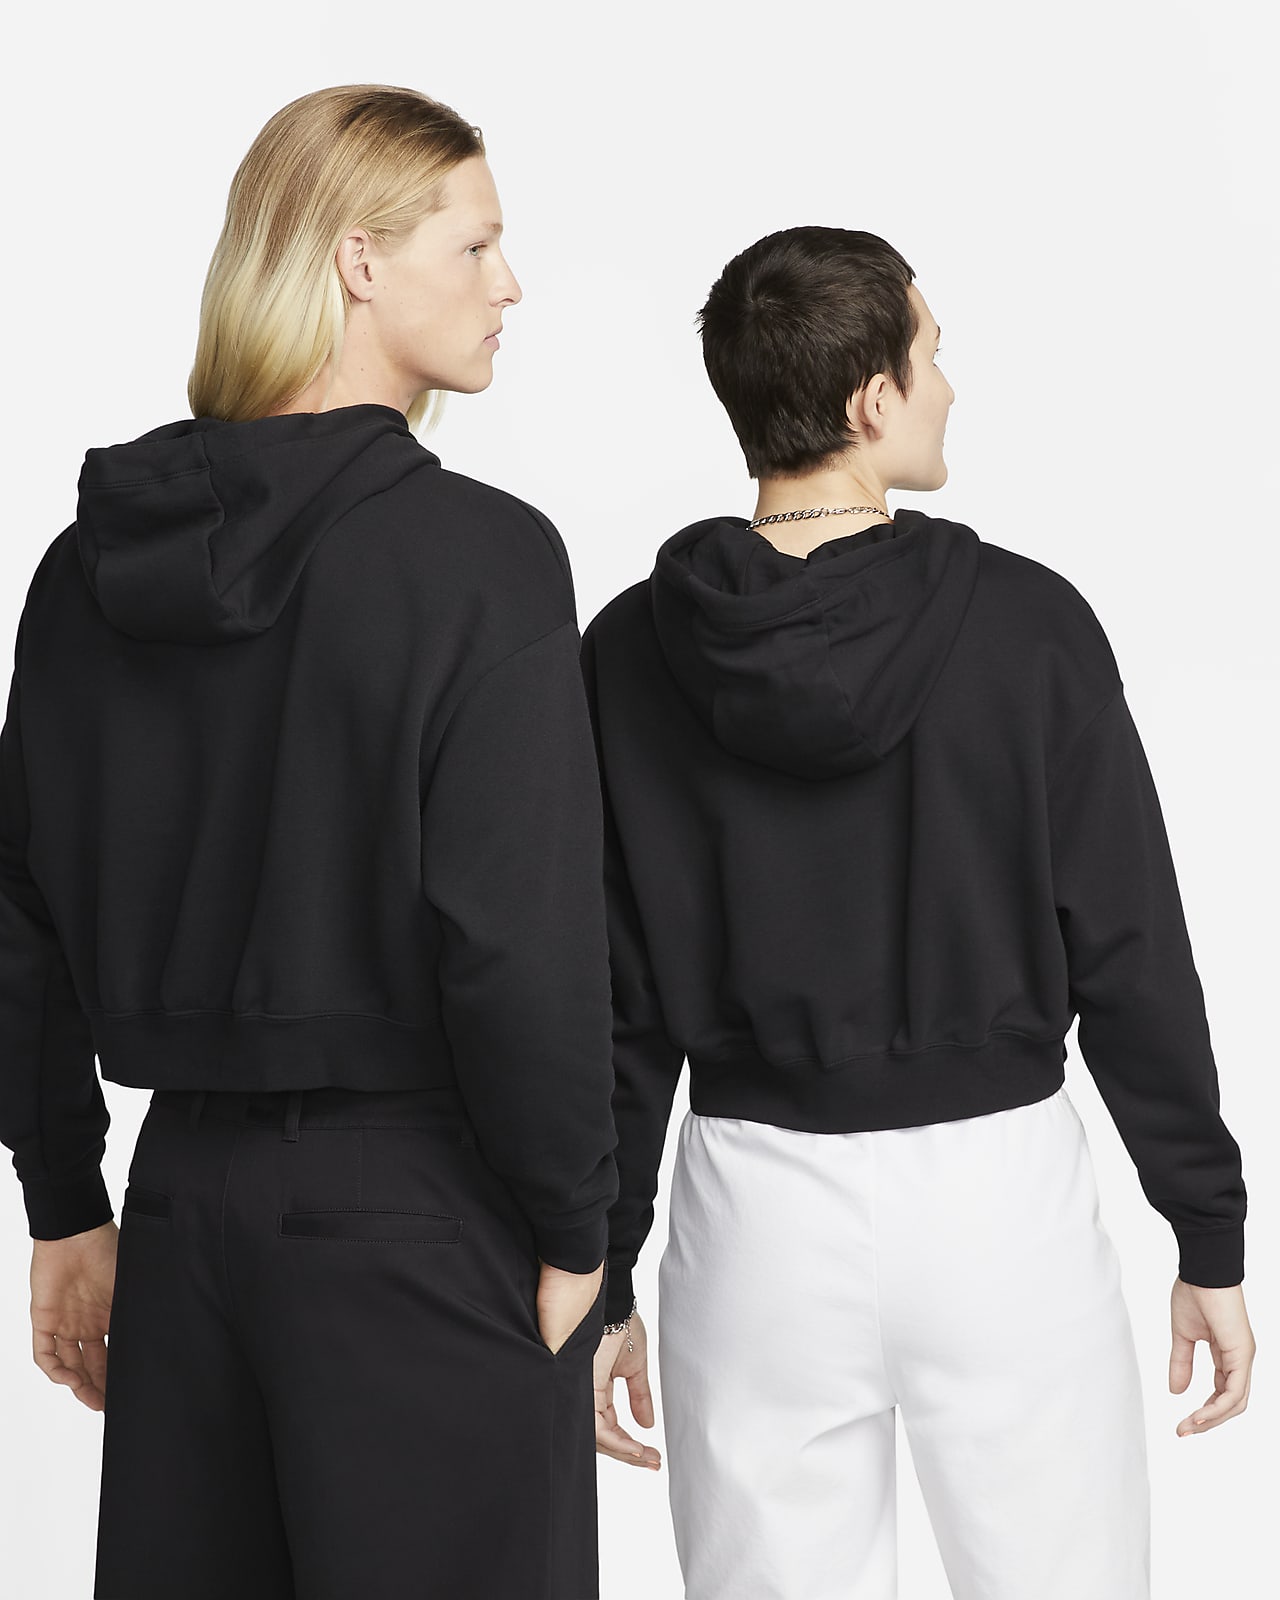 Hoodies for Women - Zip-Ups, Oversized, Cropped